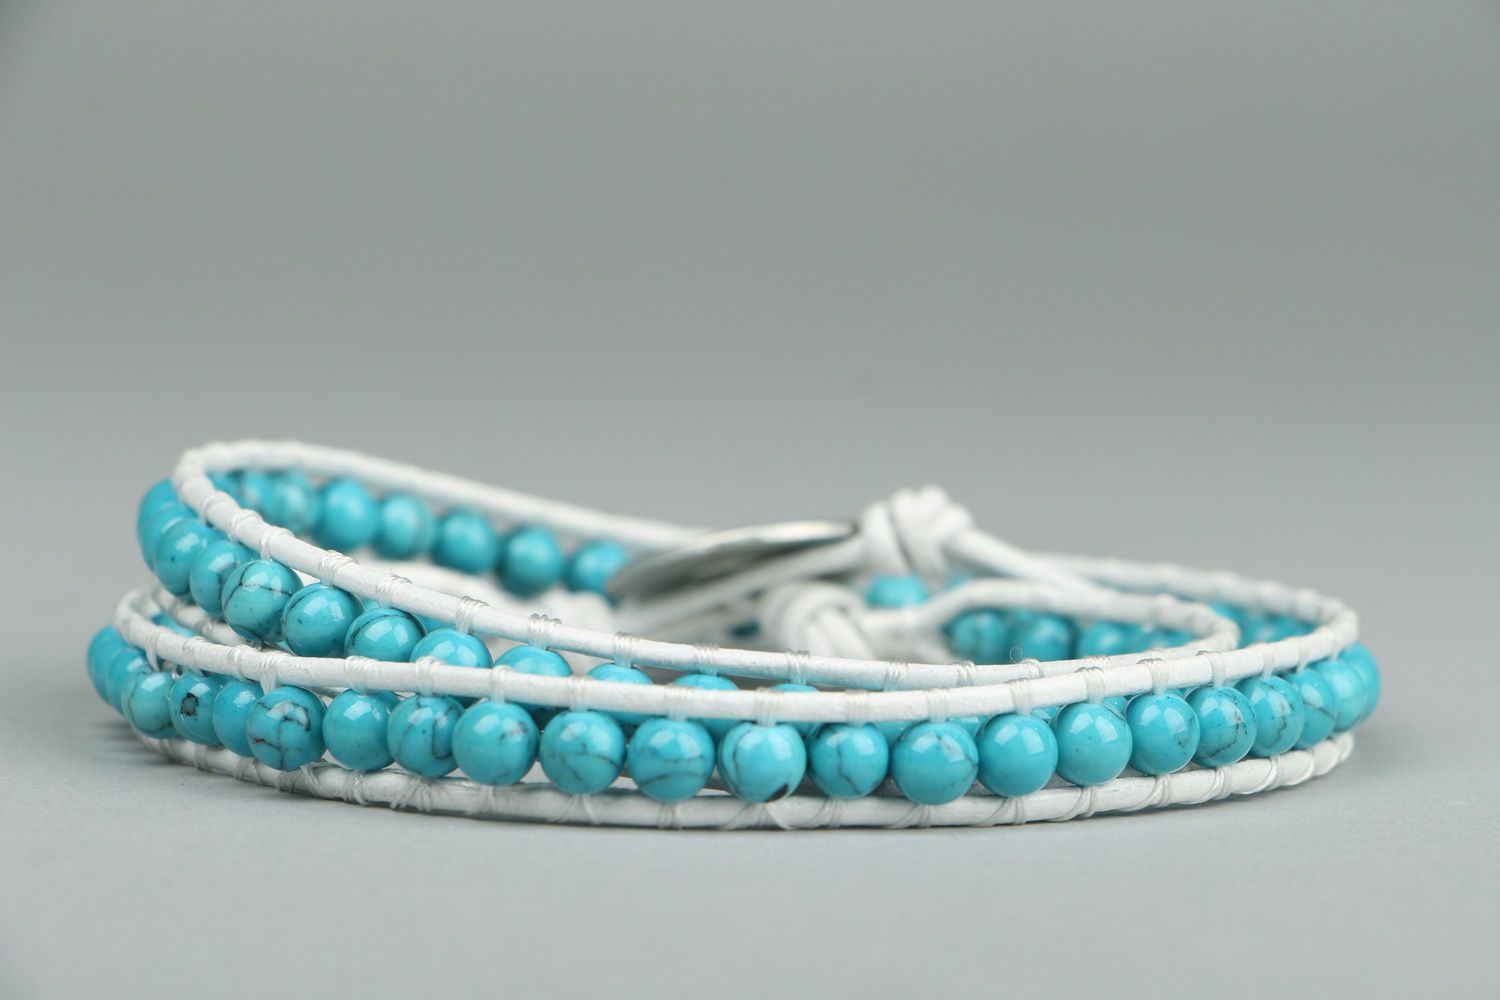 Bracelet made from turquoise stone photo 2